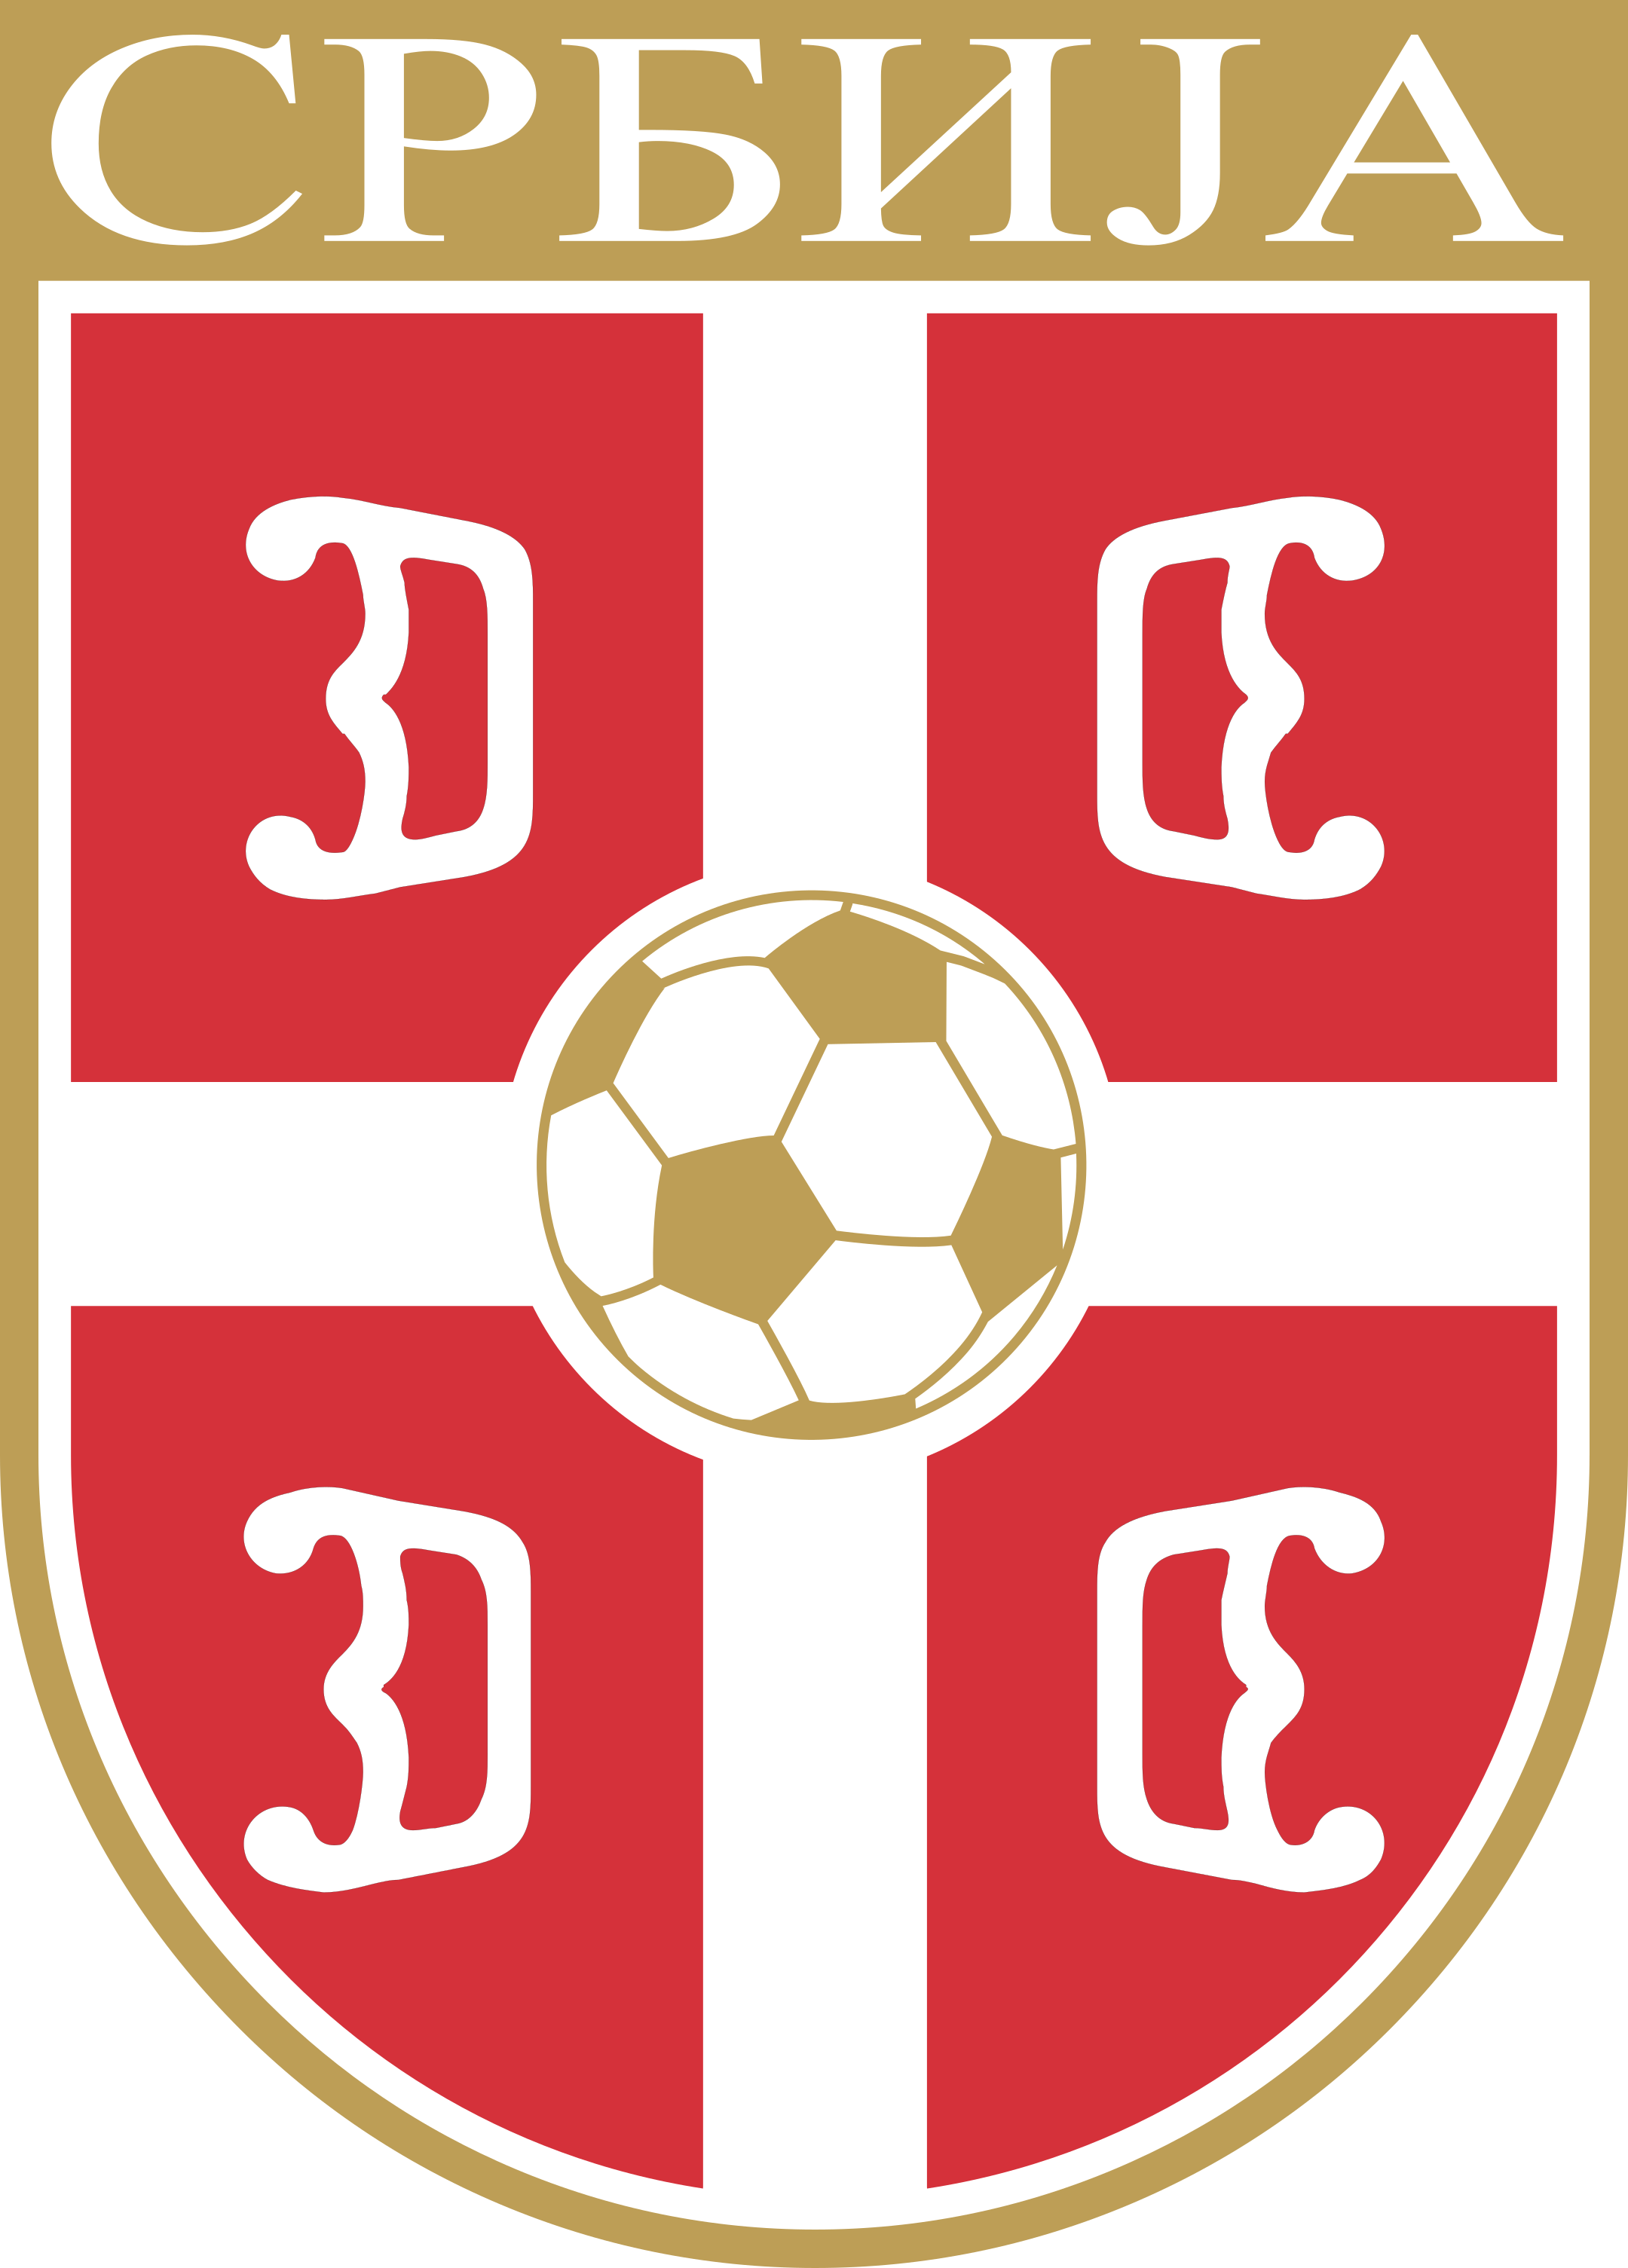 serbia national football team logo 1 - Serbia National Football Team Logo